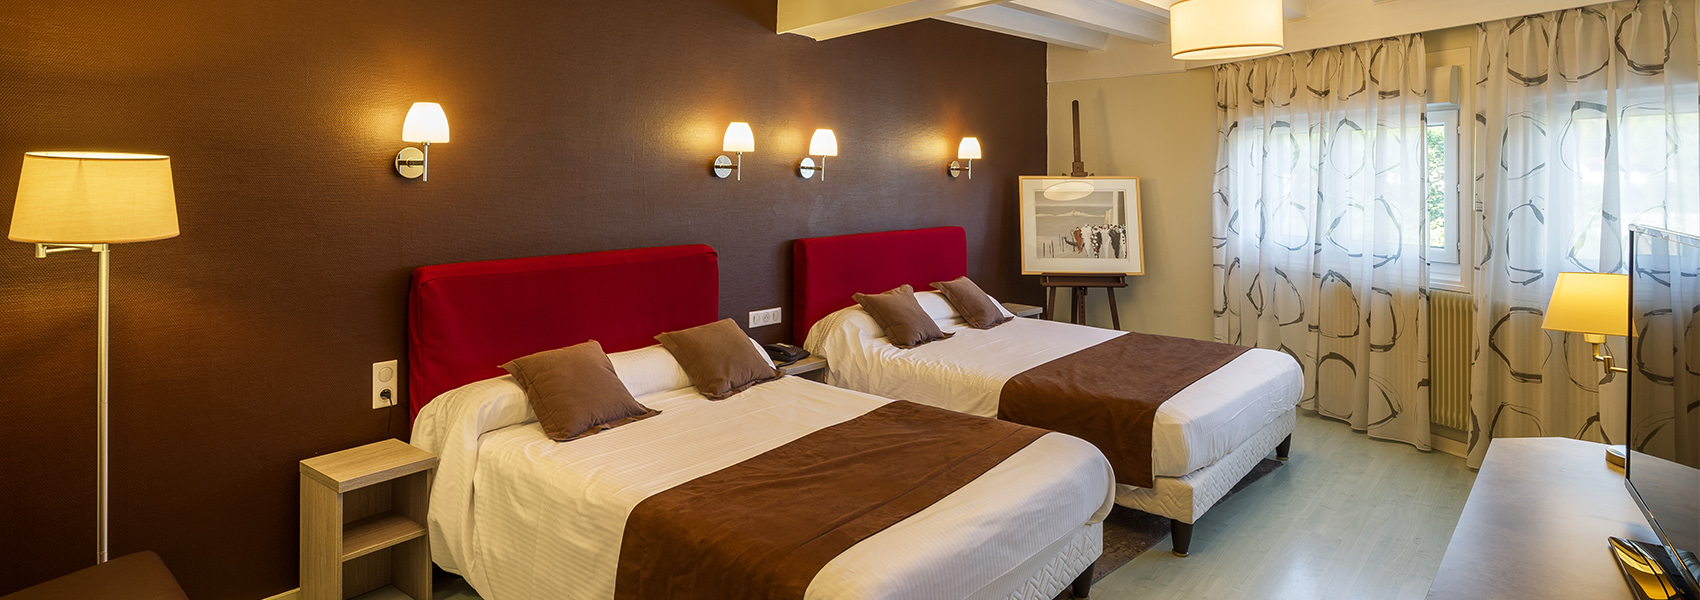 3-Sterne-Zimmer, Relais Hotel Le Saint-Hubert in Saint-Claude im Jura.